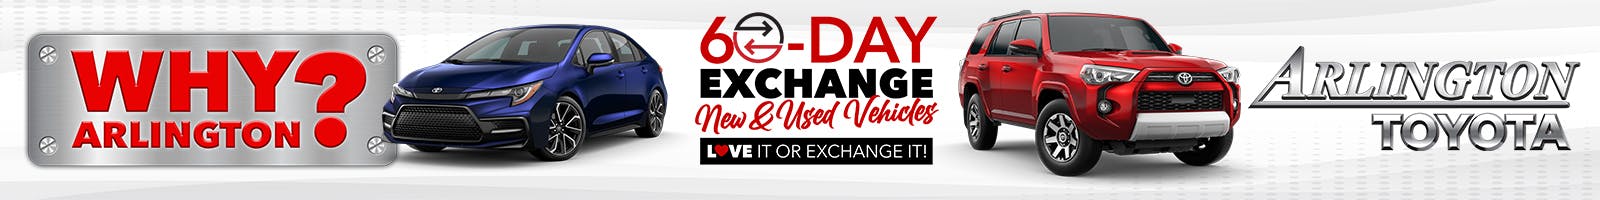 Why Arlington: 60 Day Exchange | Arlington Toyota